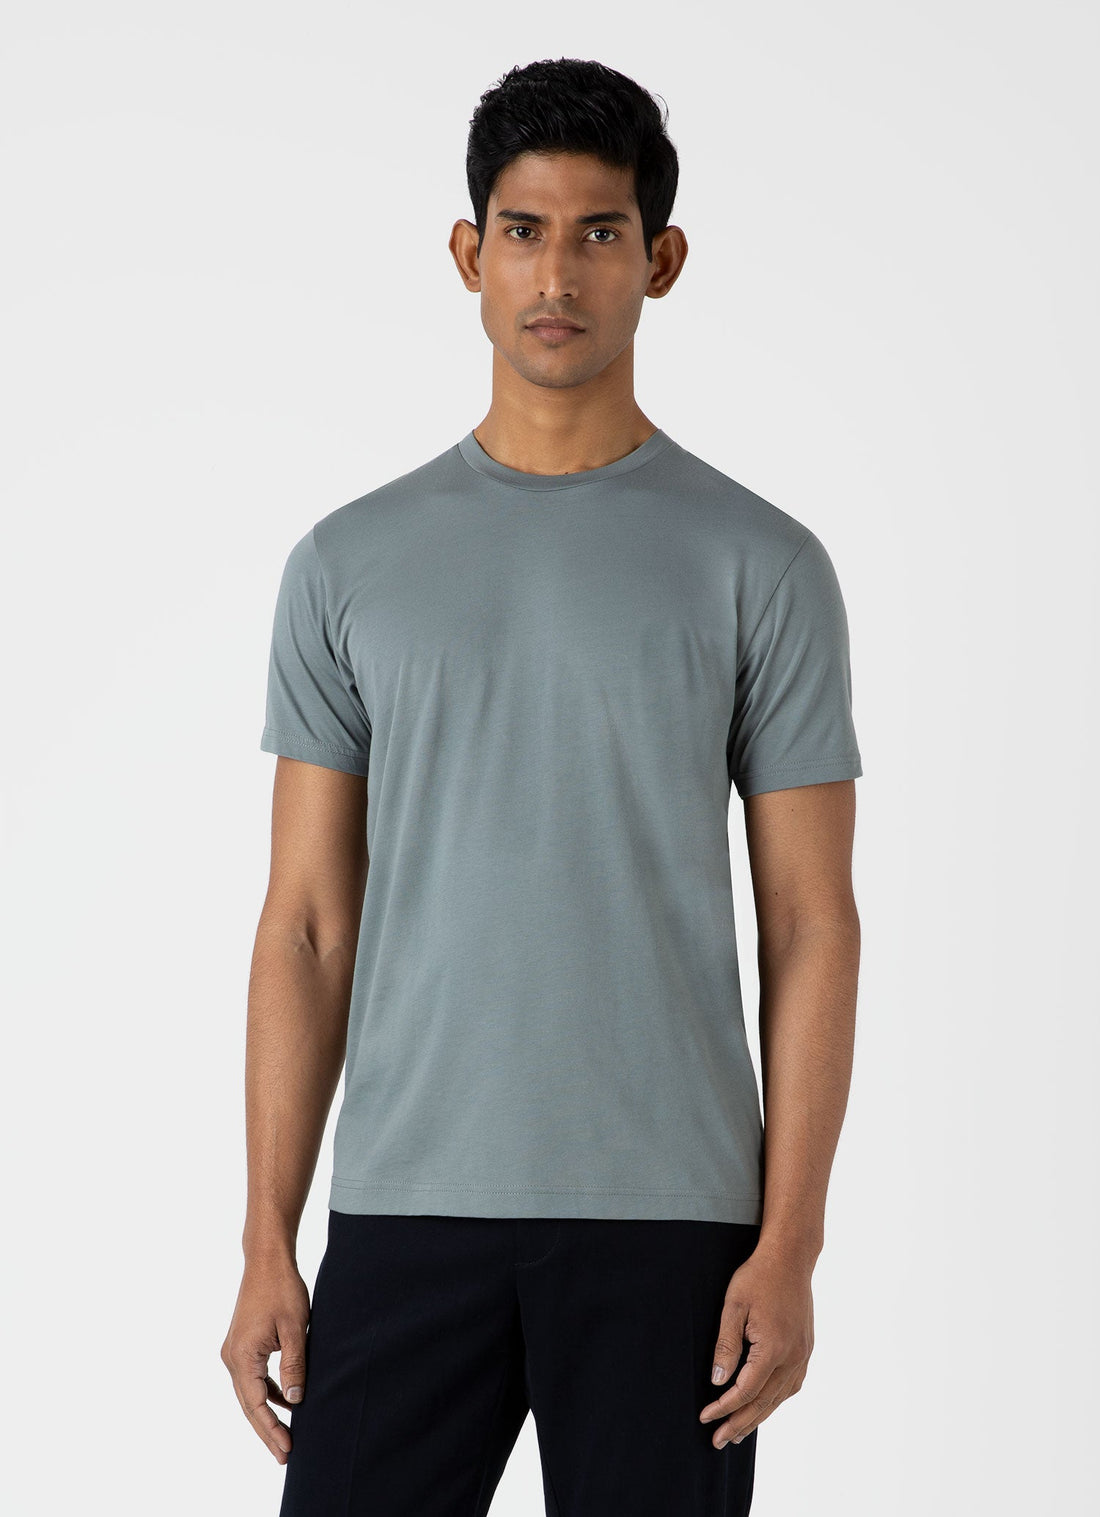 Men's Riviera Midweight T-shirt in Smoke Green